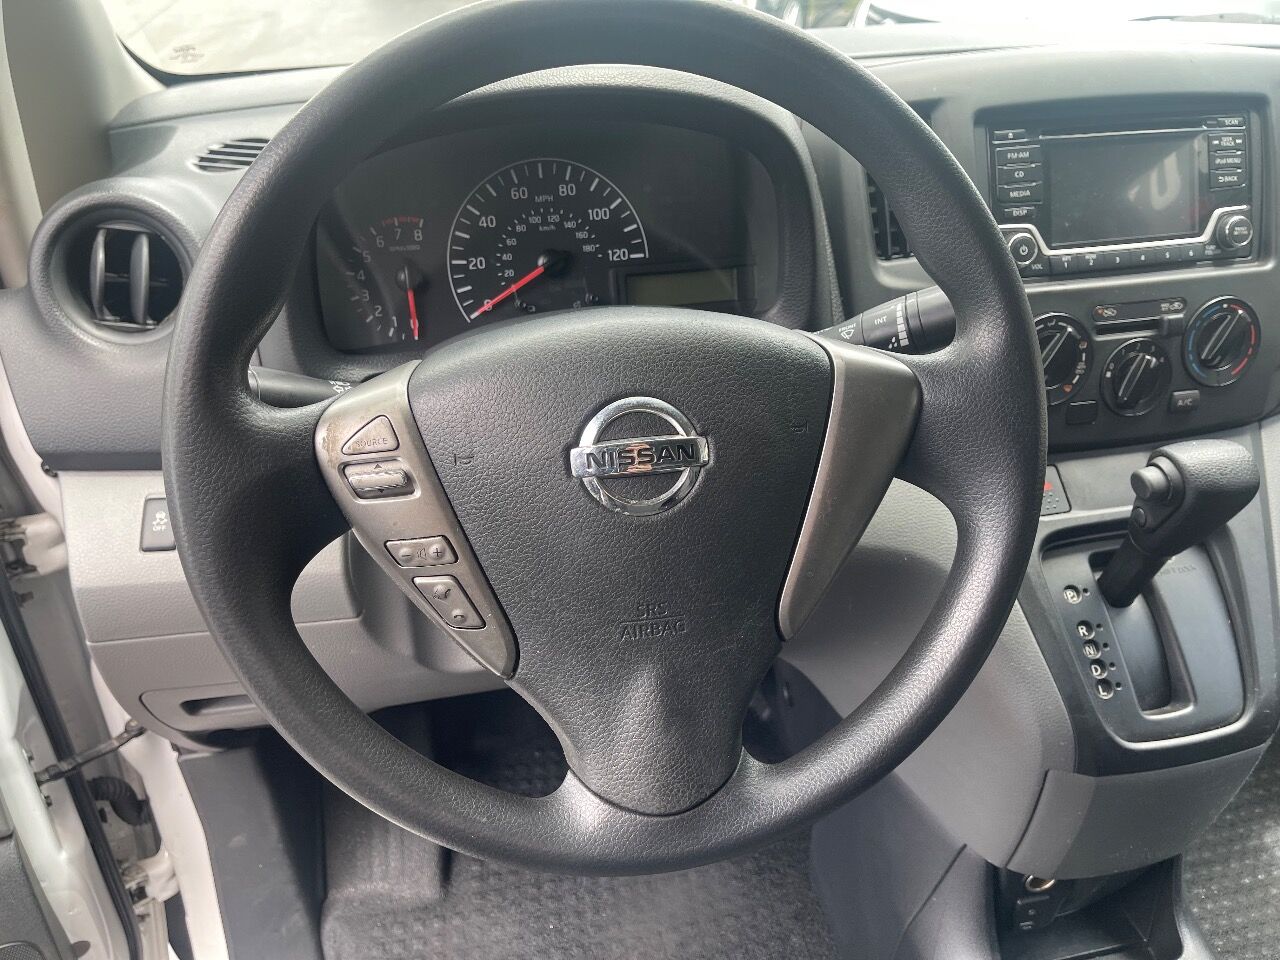 2018 Nissan NV200 Van - $18,900